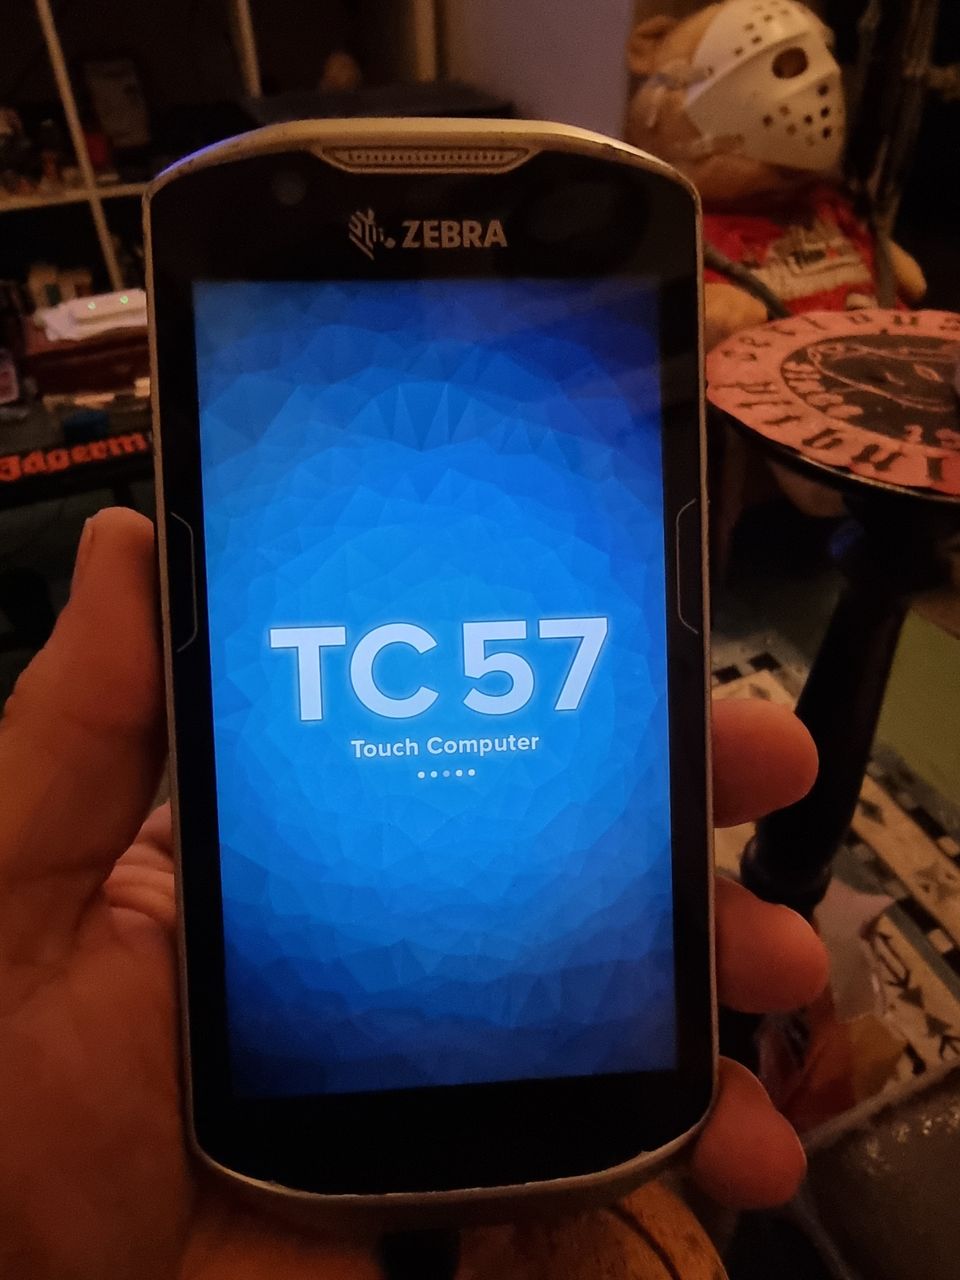 Zebra Tc57 Touch Computer